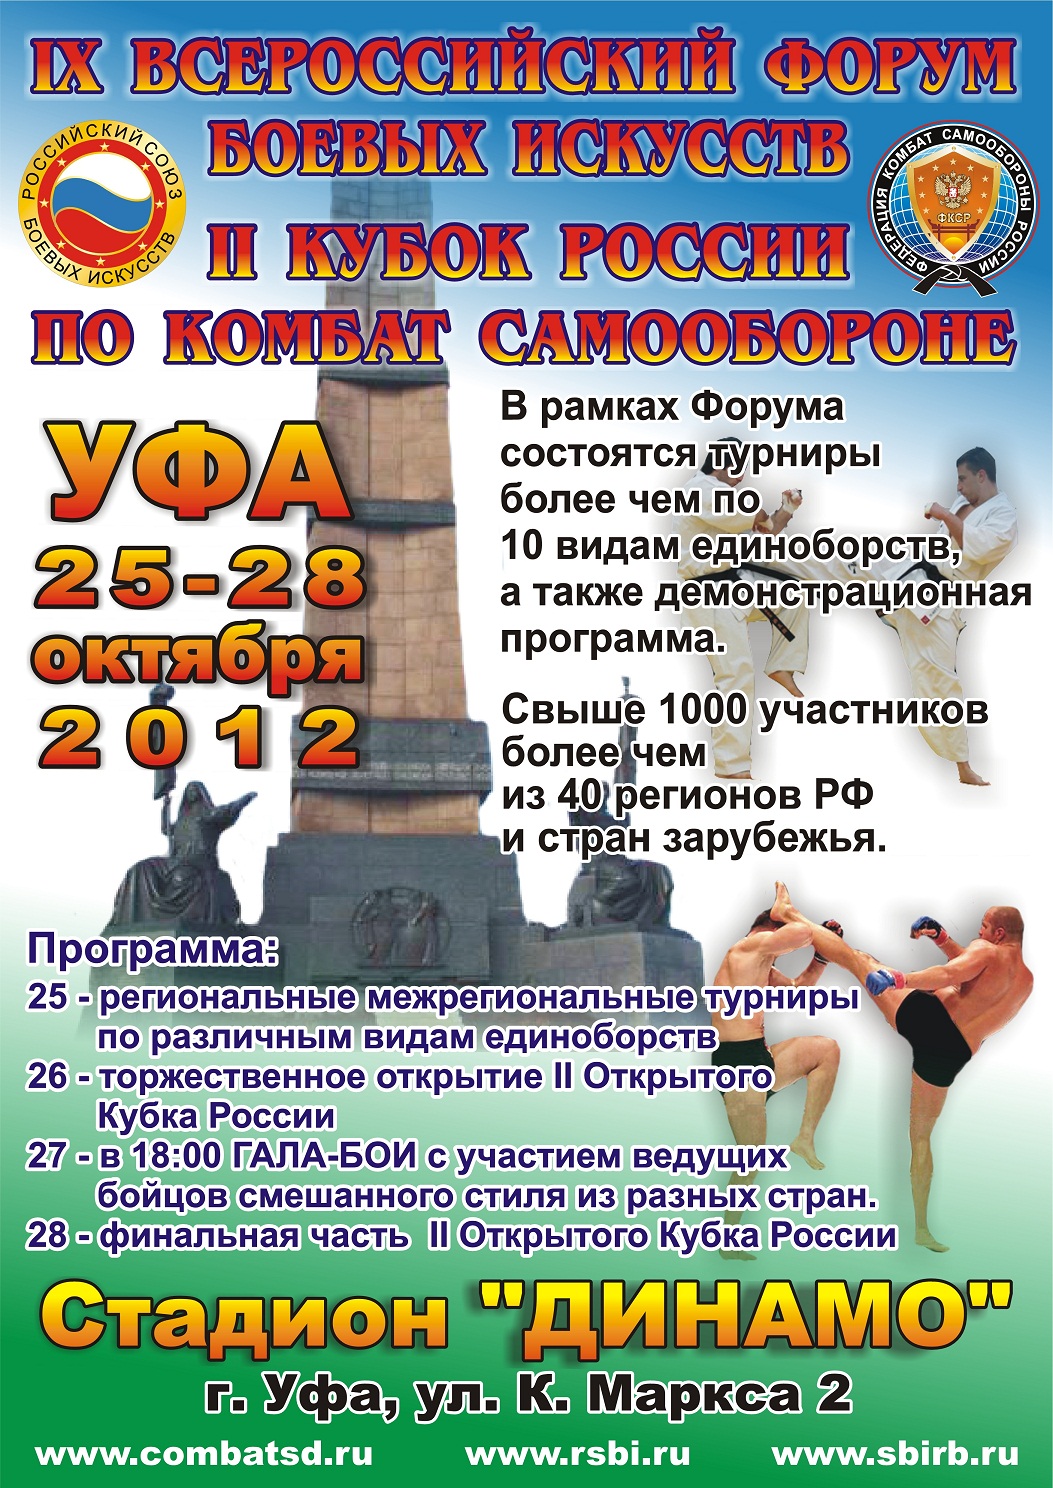 http://www.combatsd.ru/images/upload/афиша%20Кубок%20-2012.jpg